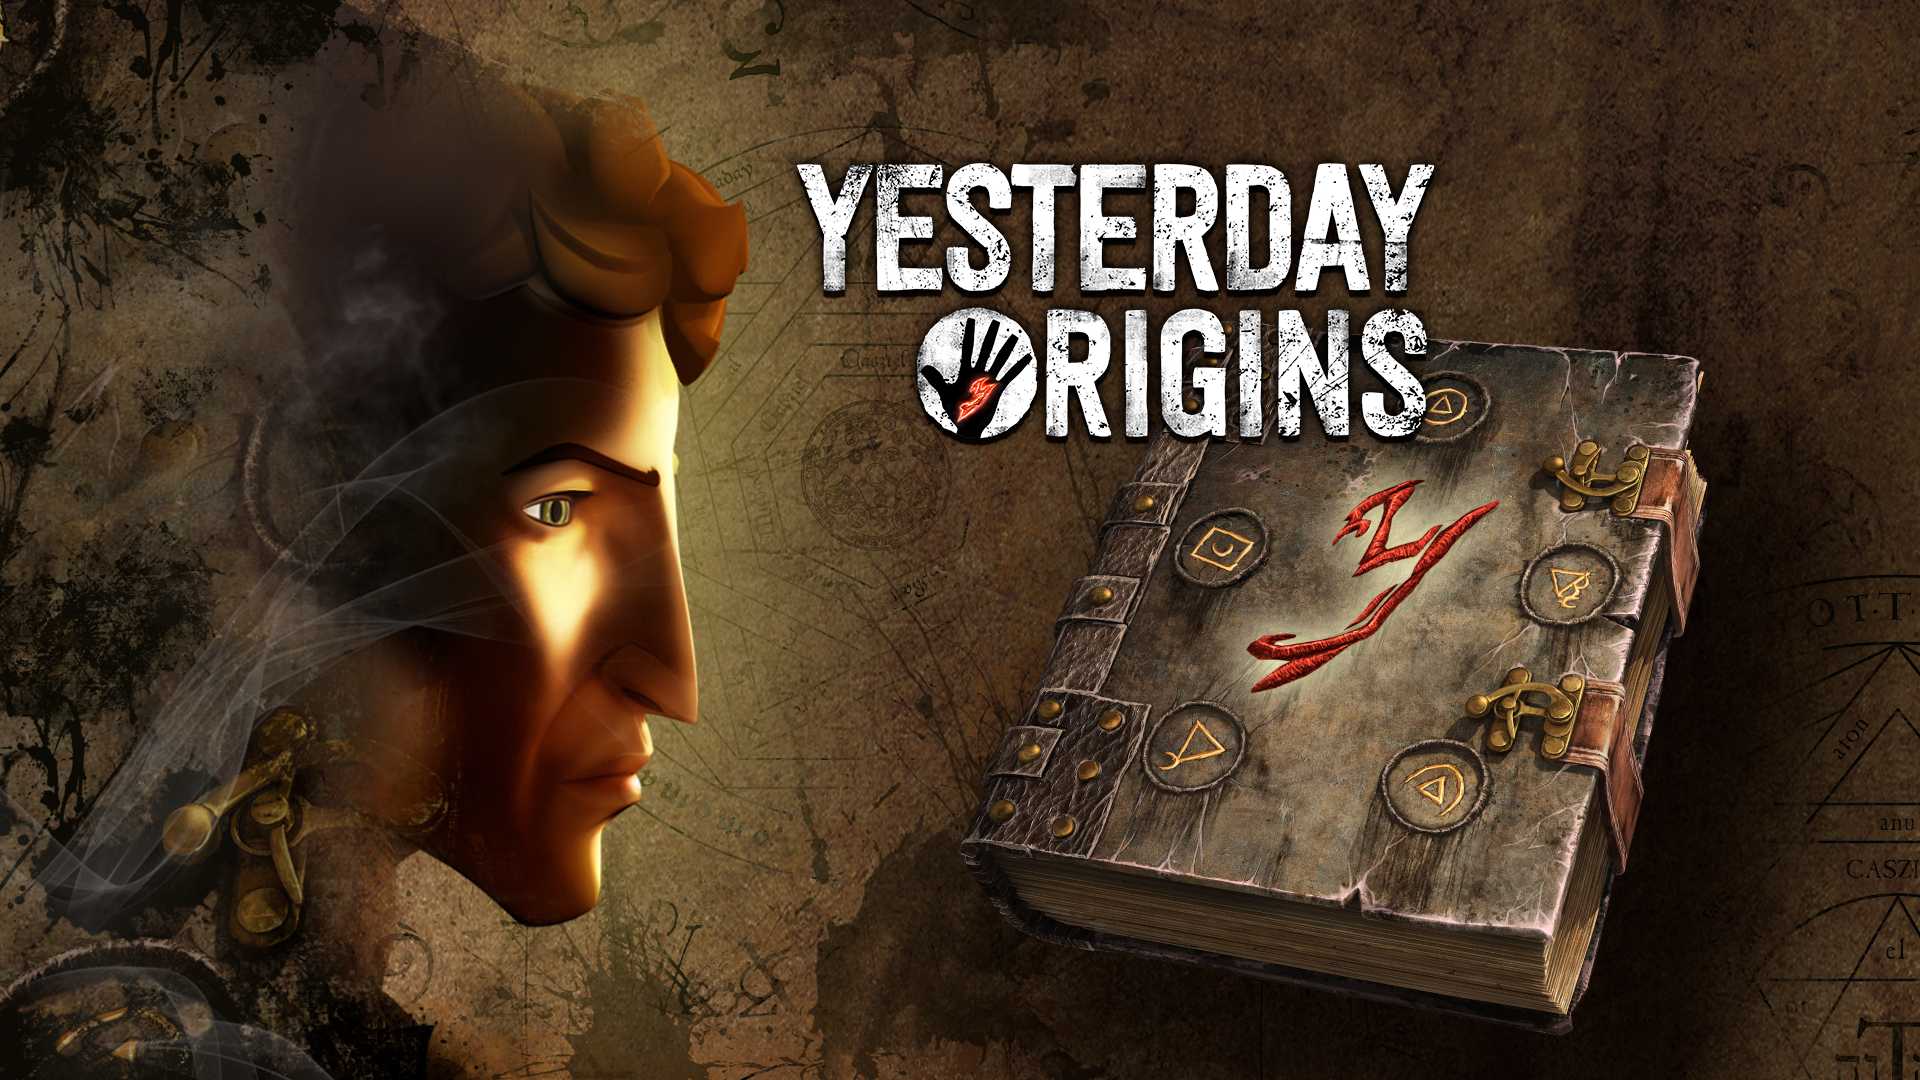 Yesterday Origins XBOX ONE / XBOX SERIES X|S / PC ?